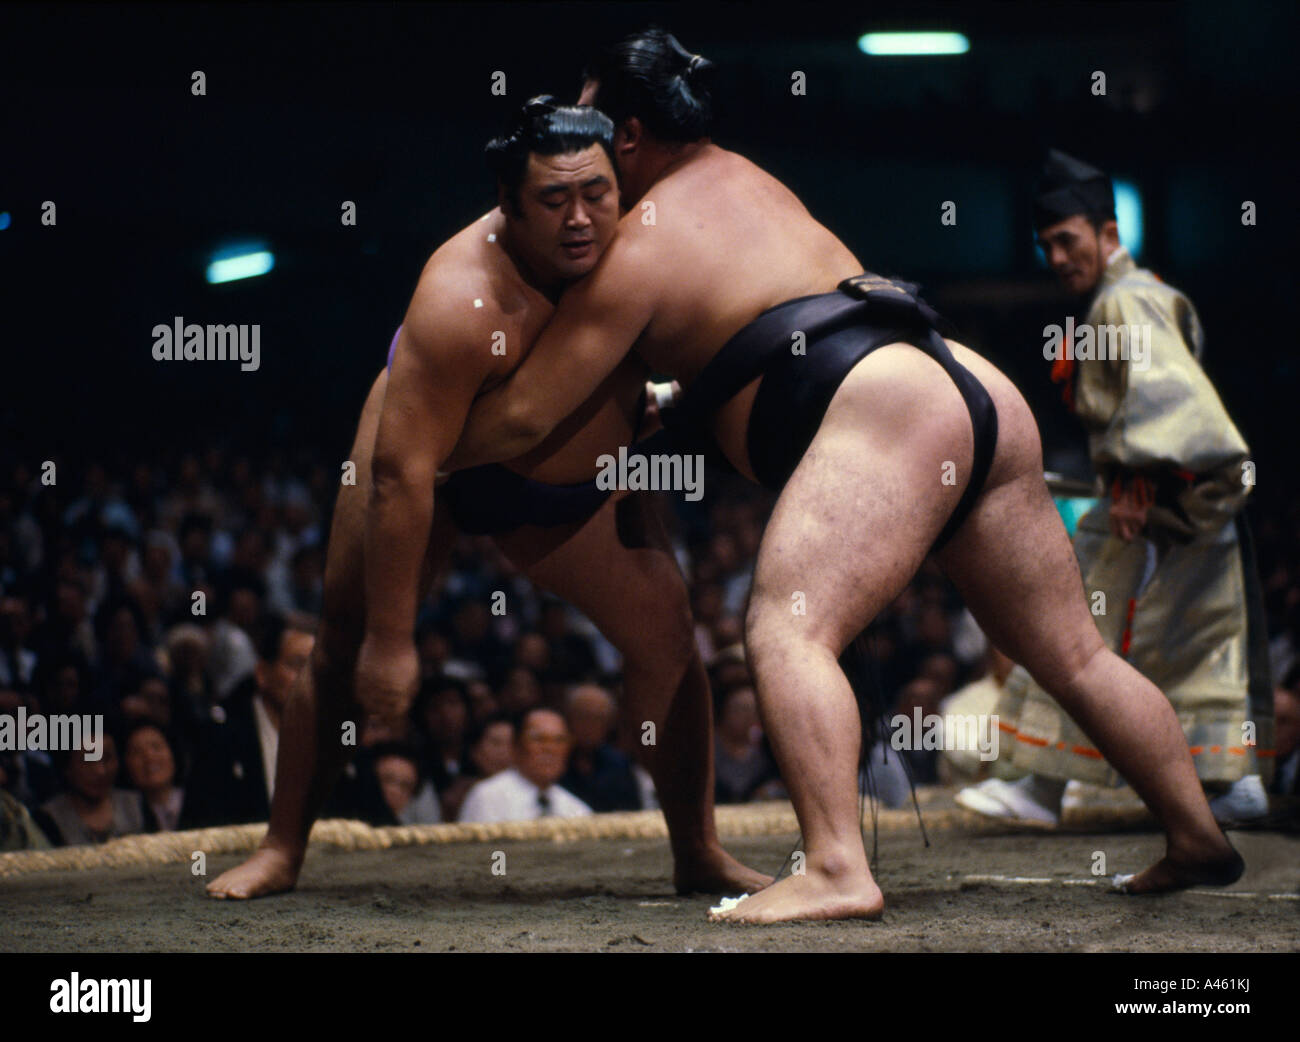 Giappone Honshu Tokyo Ryogoku Kokugikan Grandi Campionati di Sumo lottatori Foto Stock